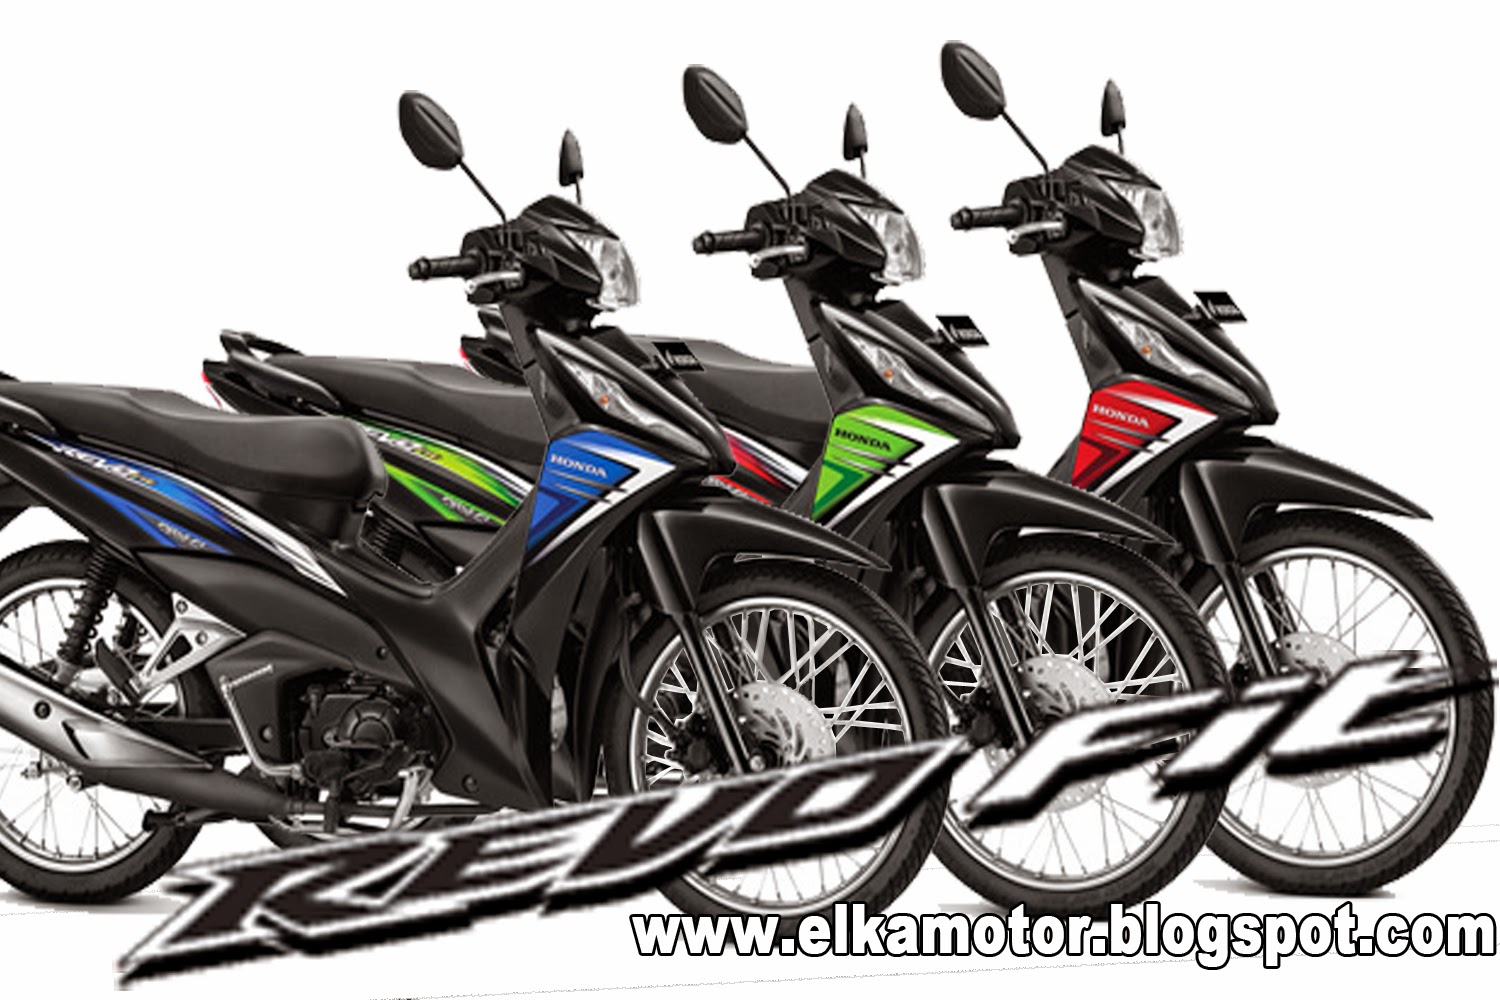 ElkaMotor Honda Revo FI Dealer Motor Online Semarang Elka Motor